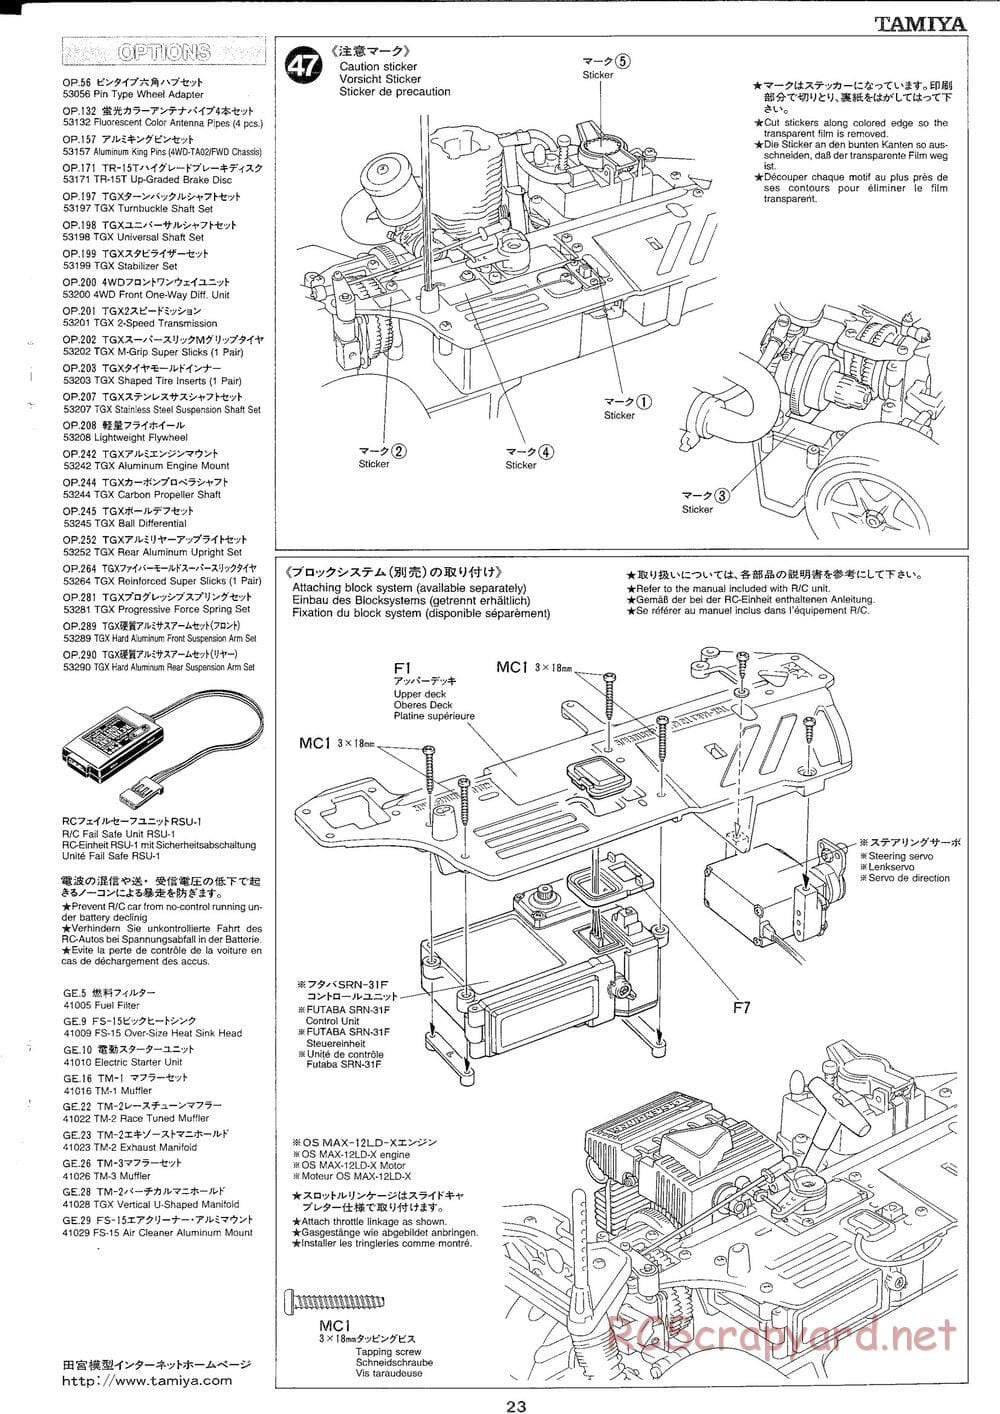 Tamiya - TGX Mk.1 TRF Special Chassis - Manual - Page 23